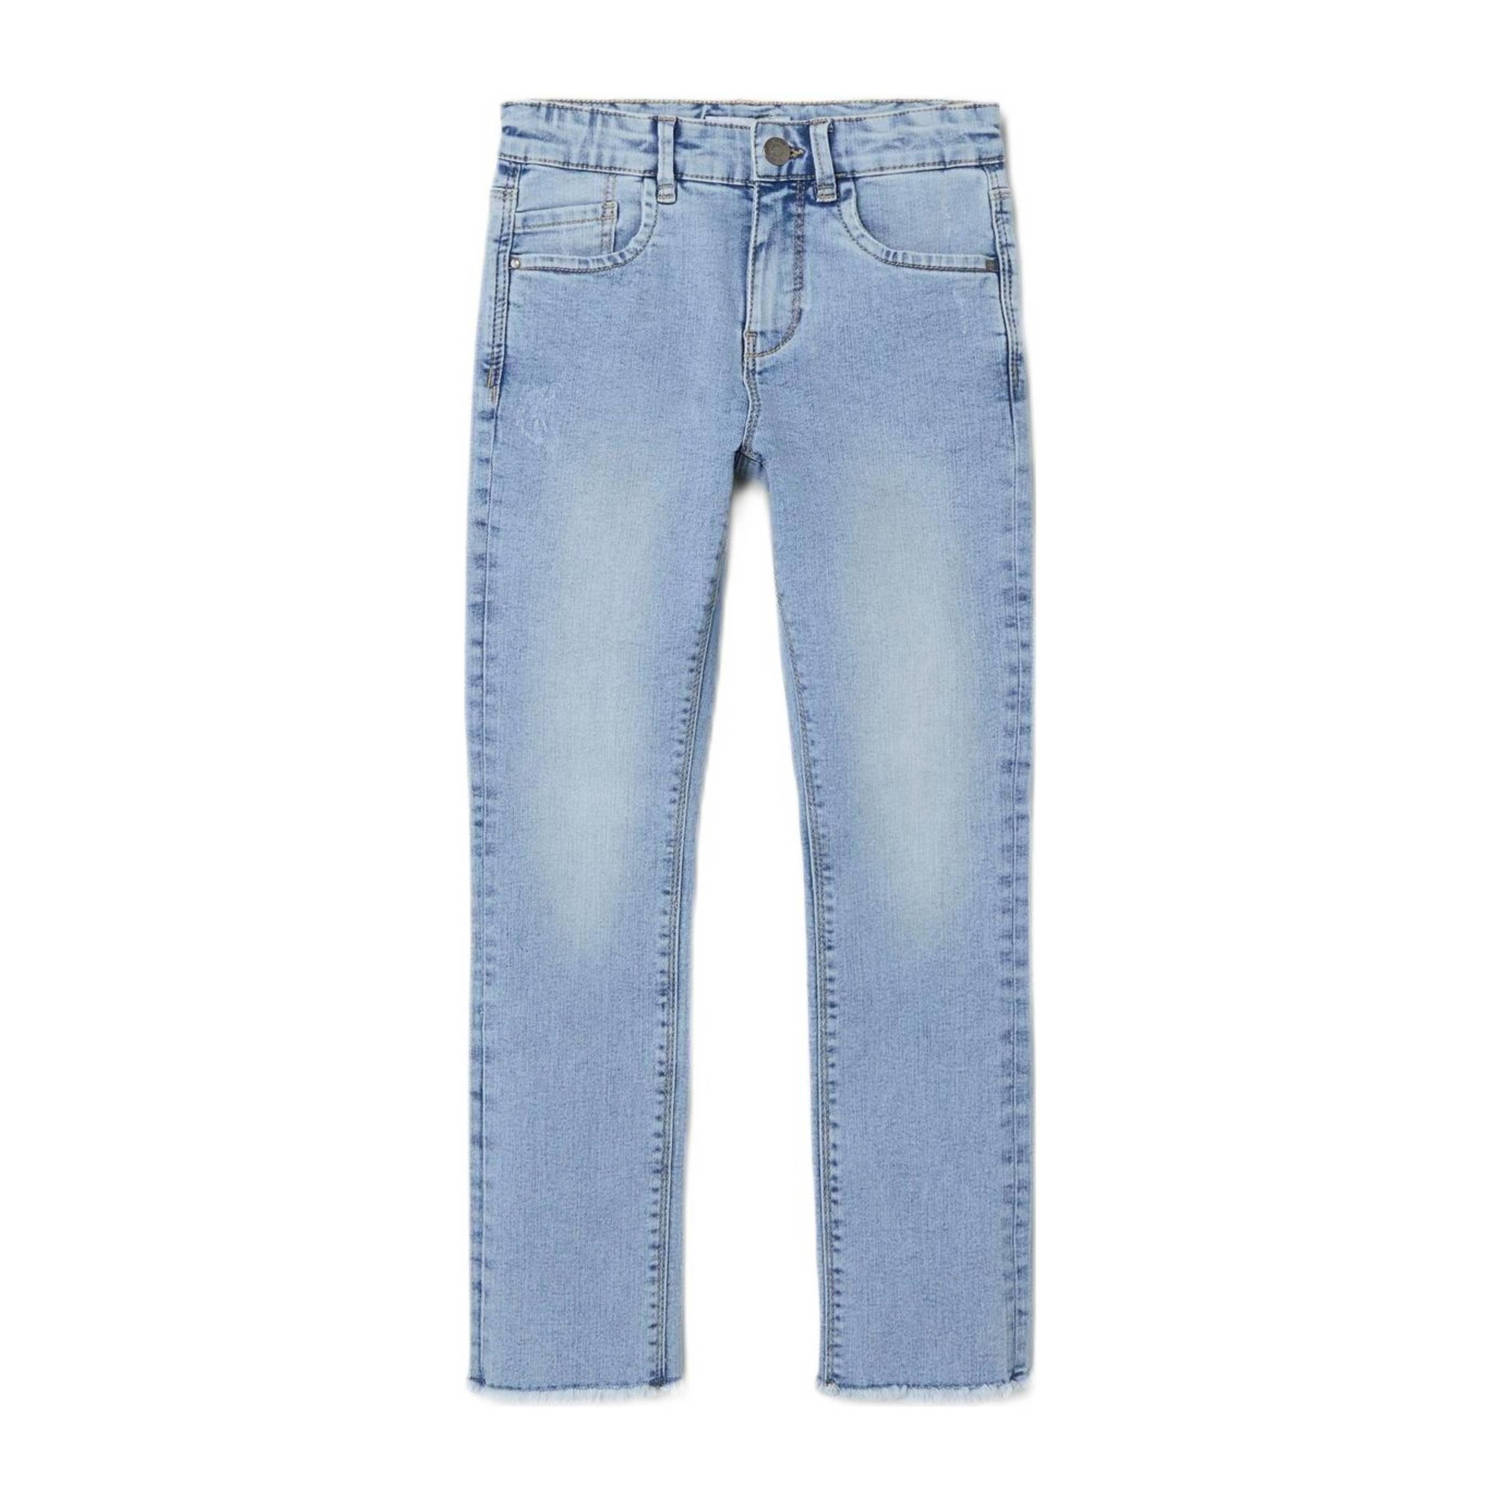 Name it KIDS skinny jeans NKFPOLLY light blue denim Blauw Meisjes Stretchdenim 110